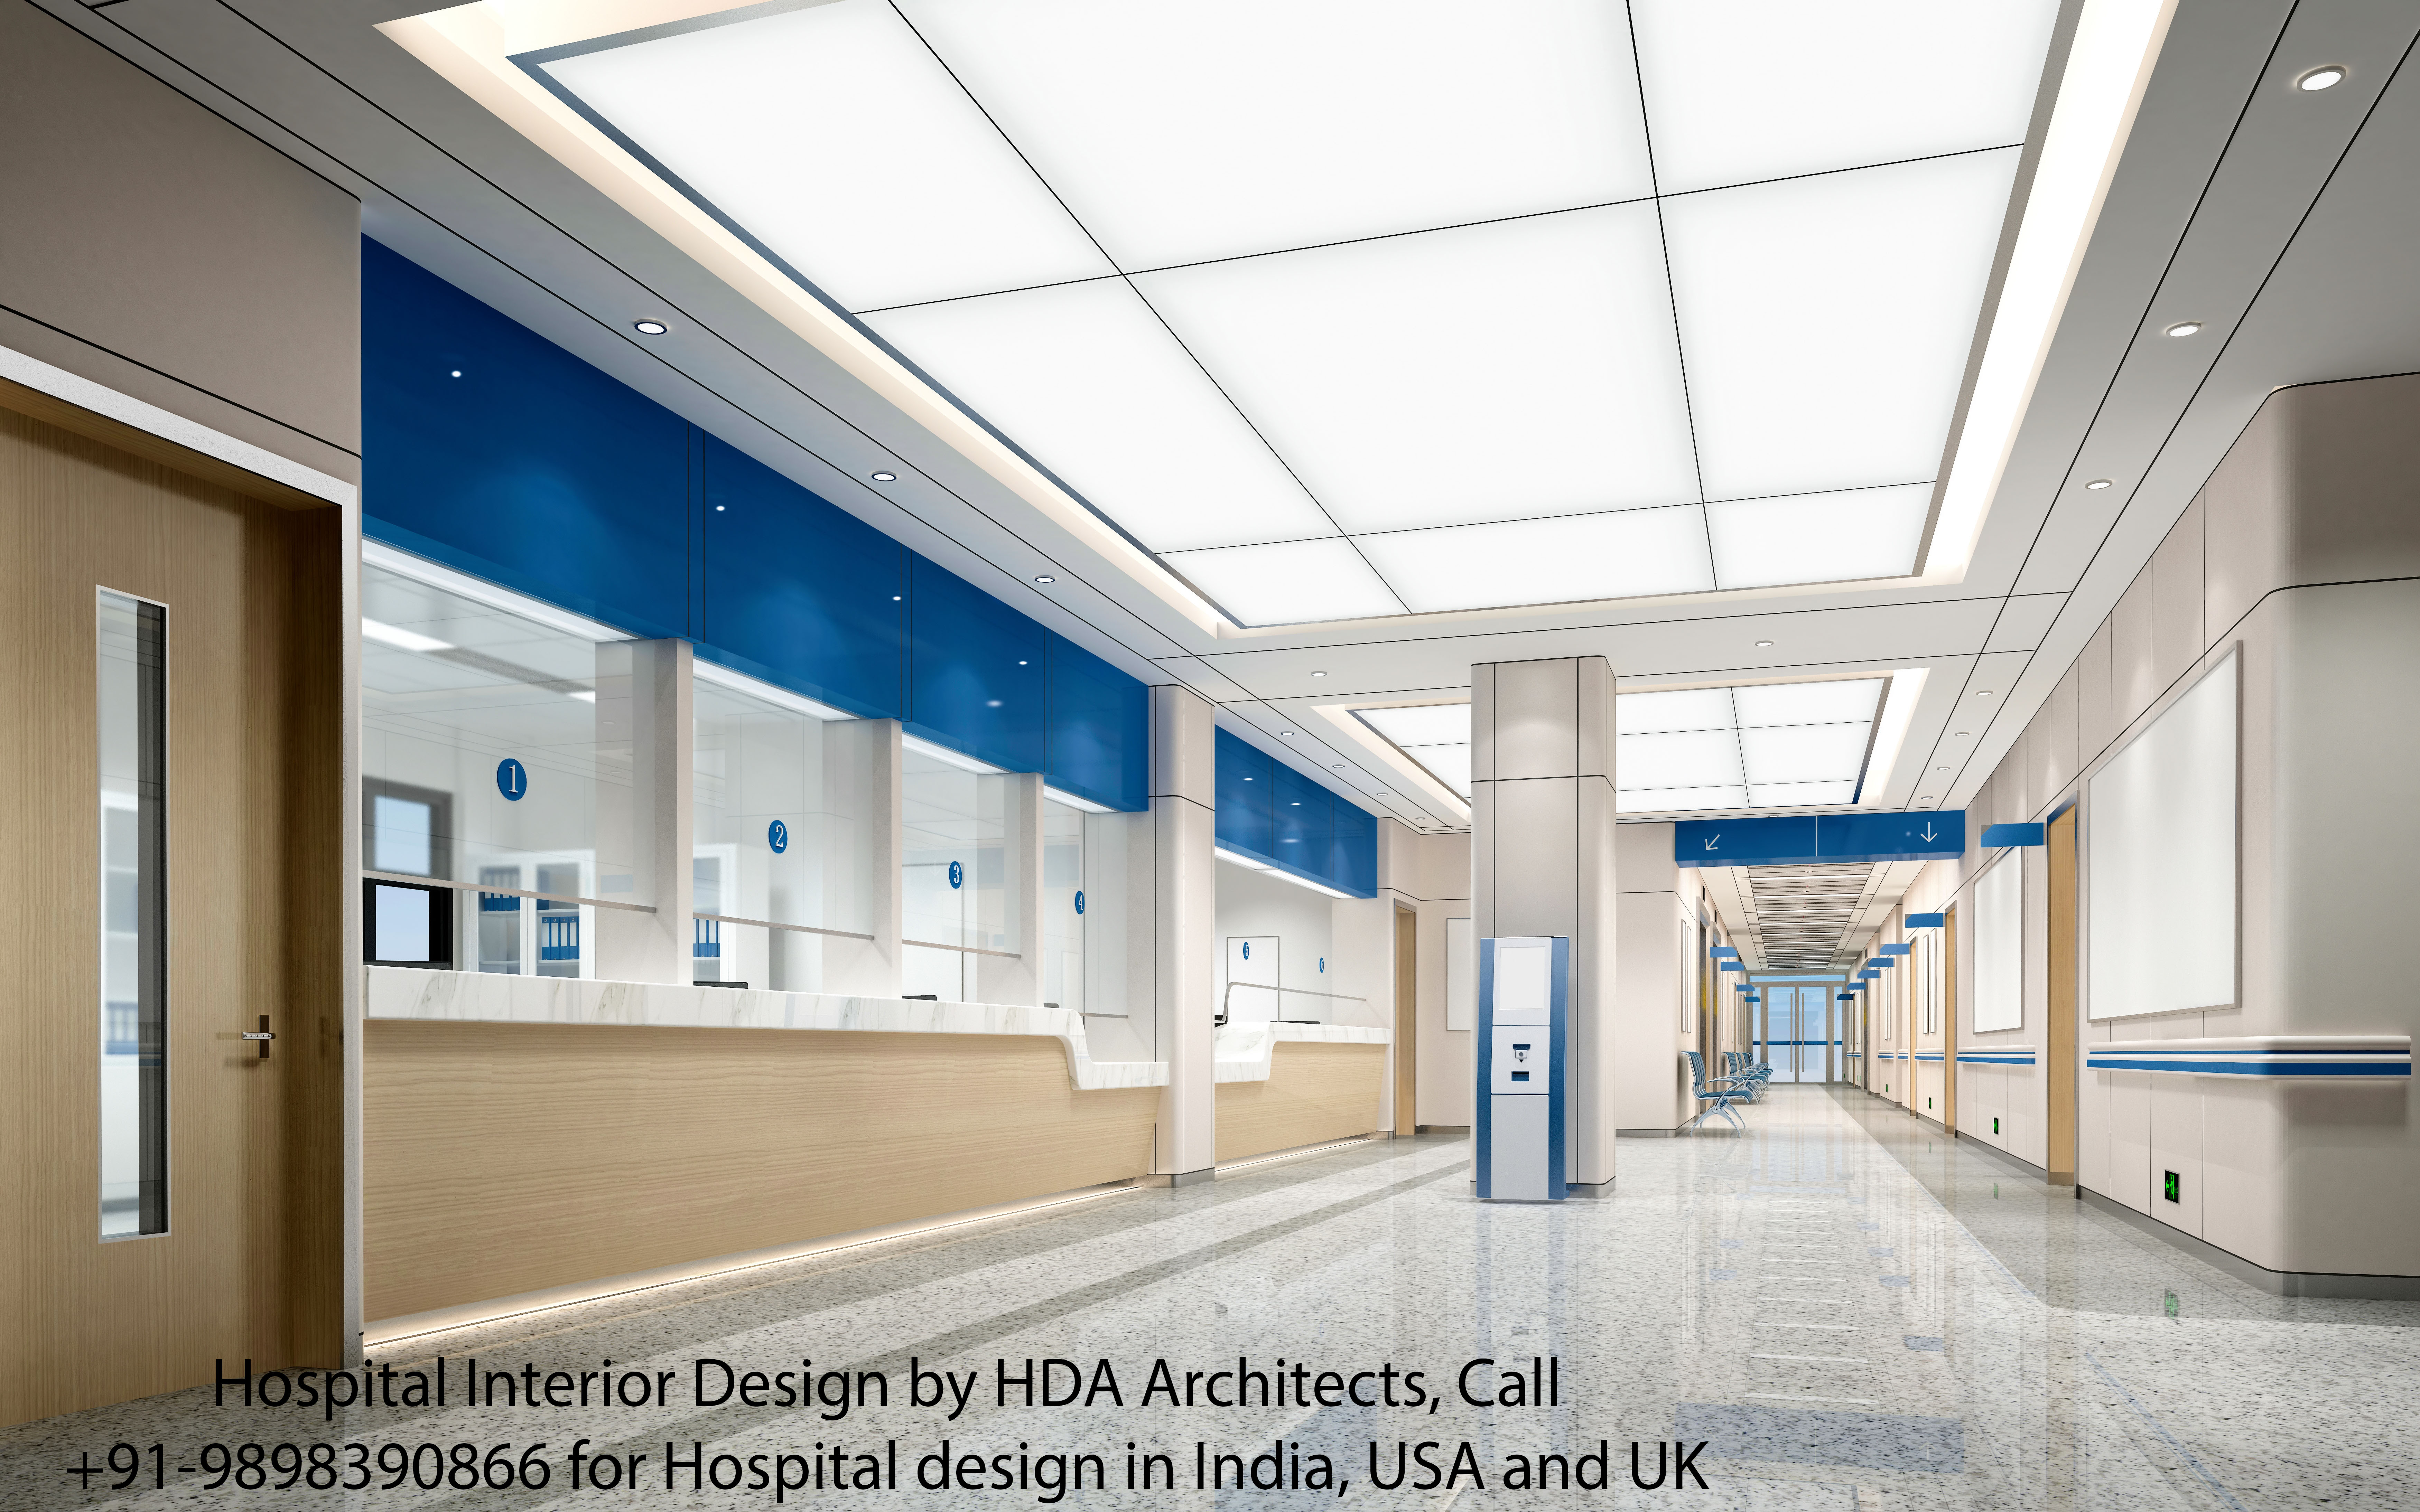 Hospital Interior Design by HDA Architects